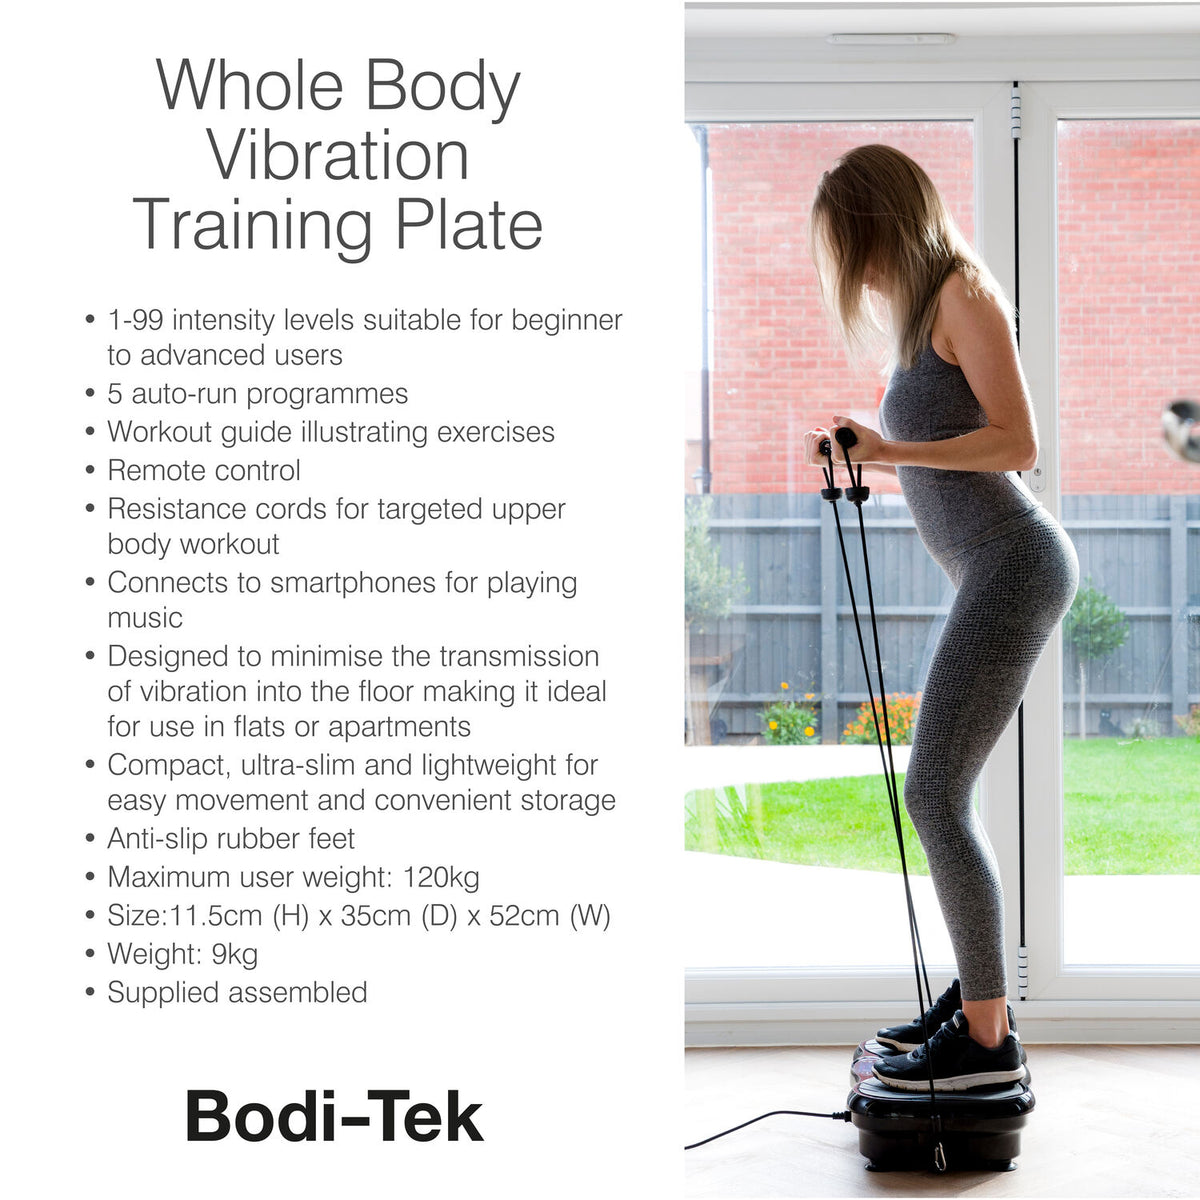 Whole Body Vibration Training Plate